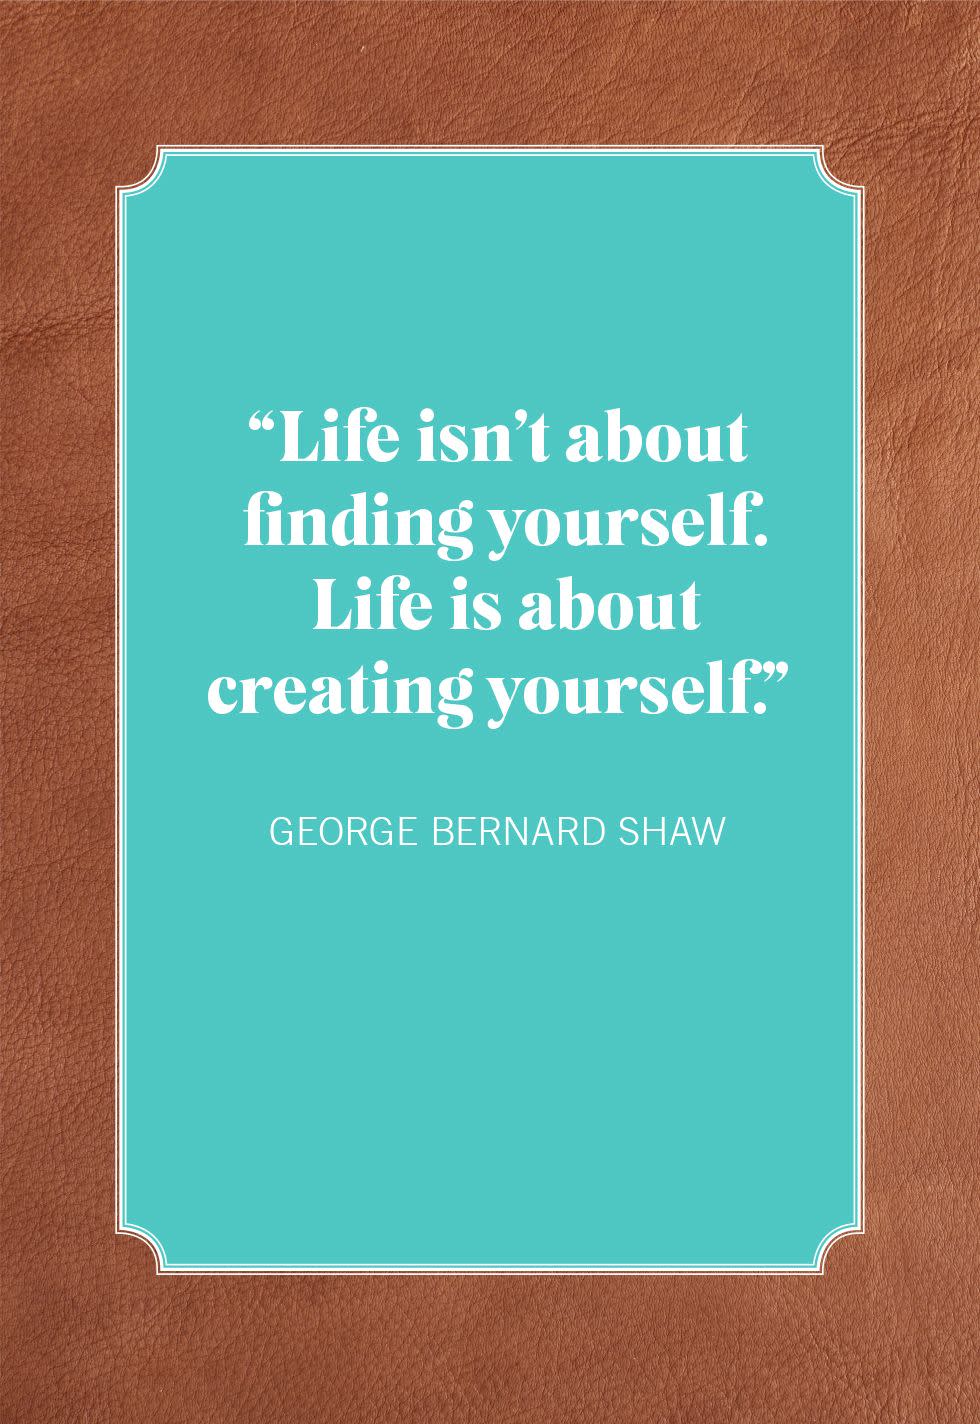 short inspirational quotes george bernard shaw